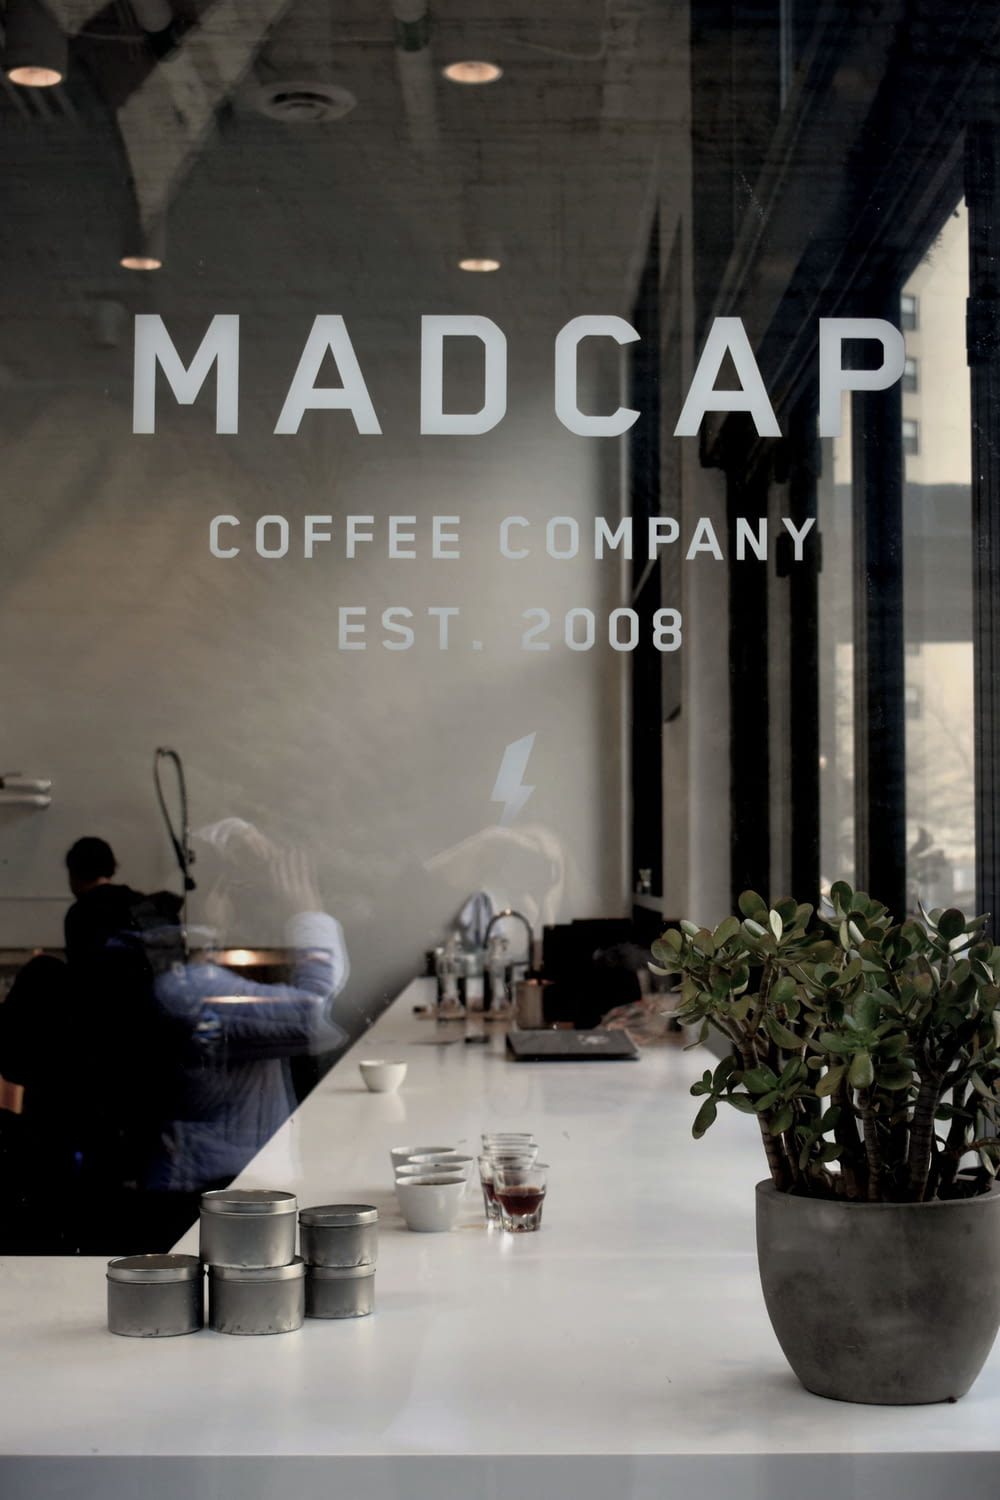 Madcap signage